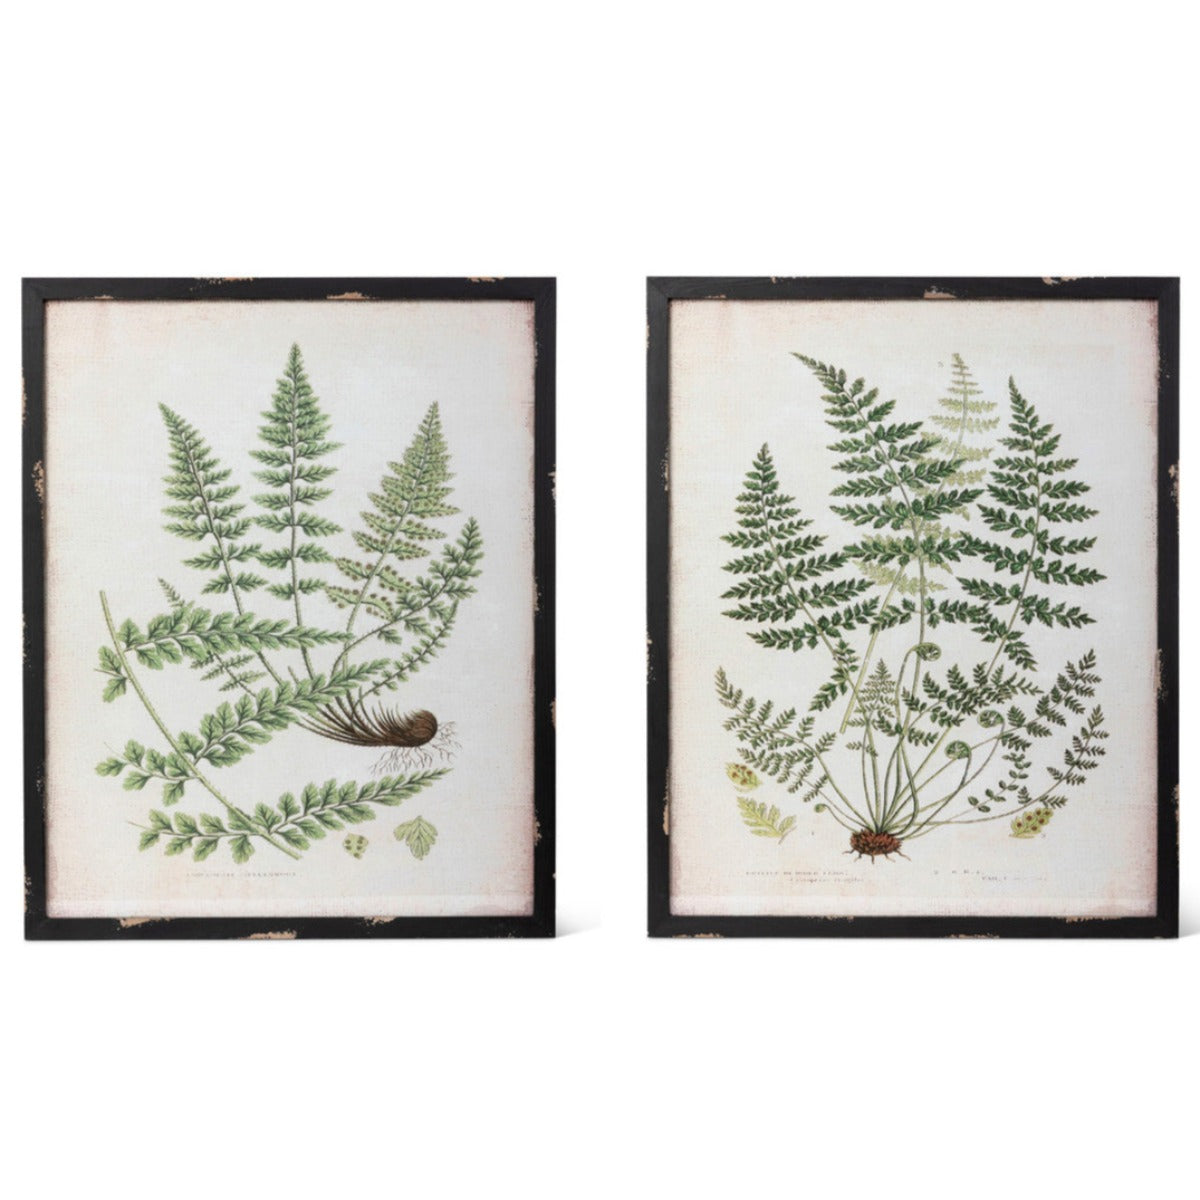 Framed Botanical Prints - Iron Accents